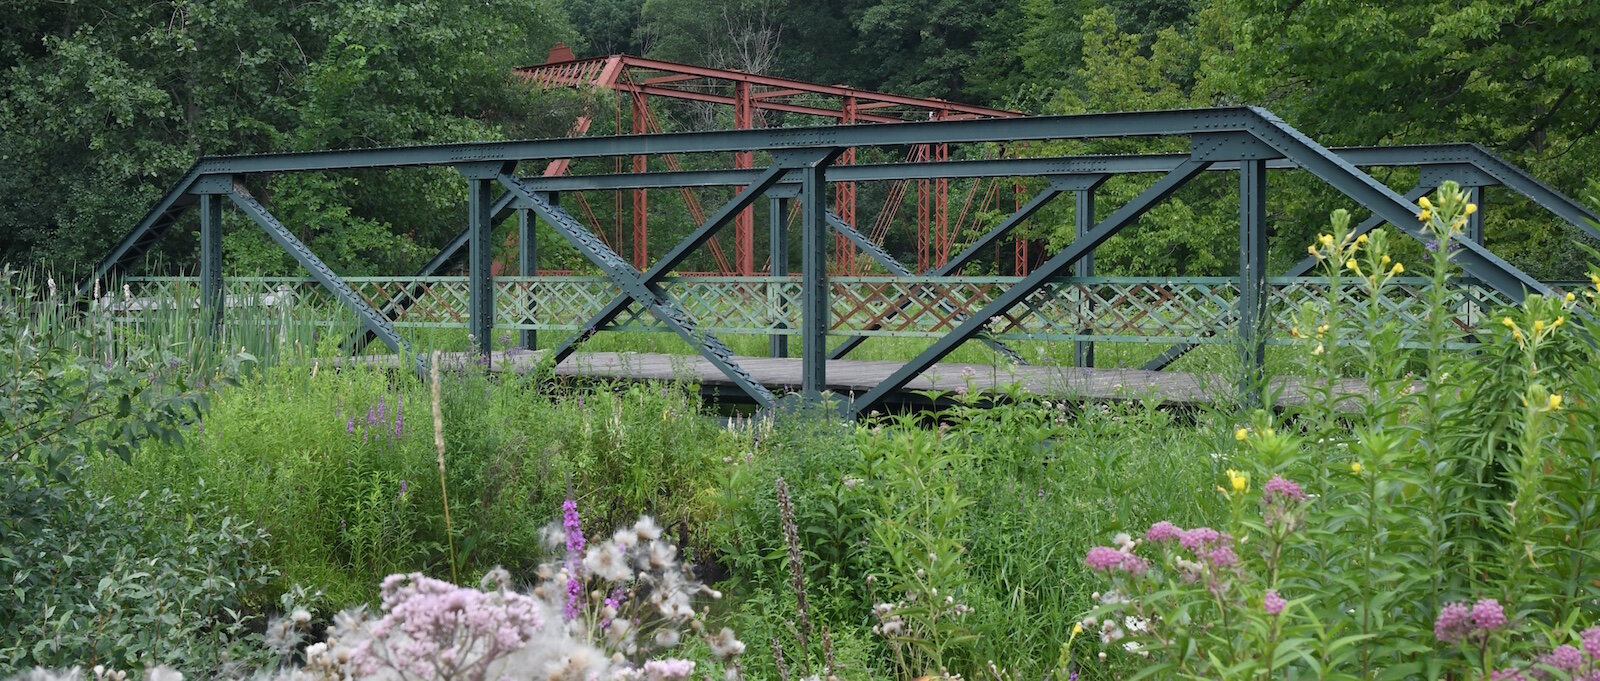 Two of the bridges in Historic Bridge Park.